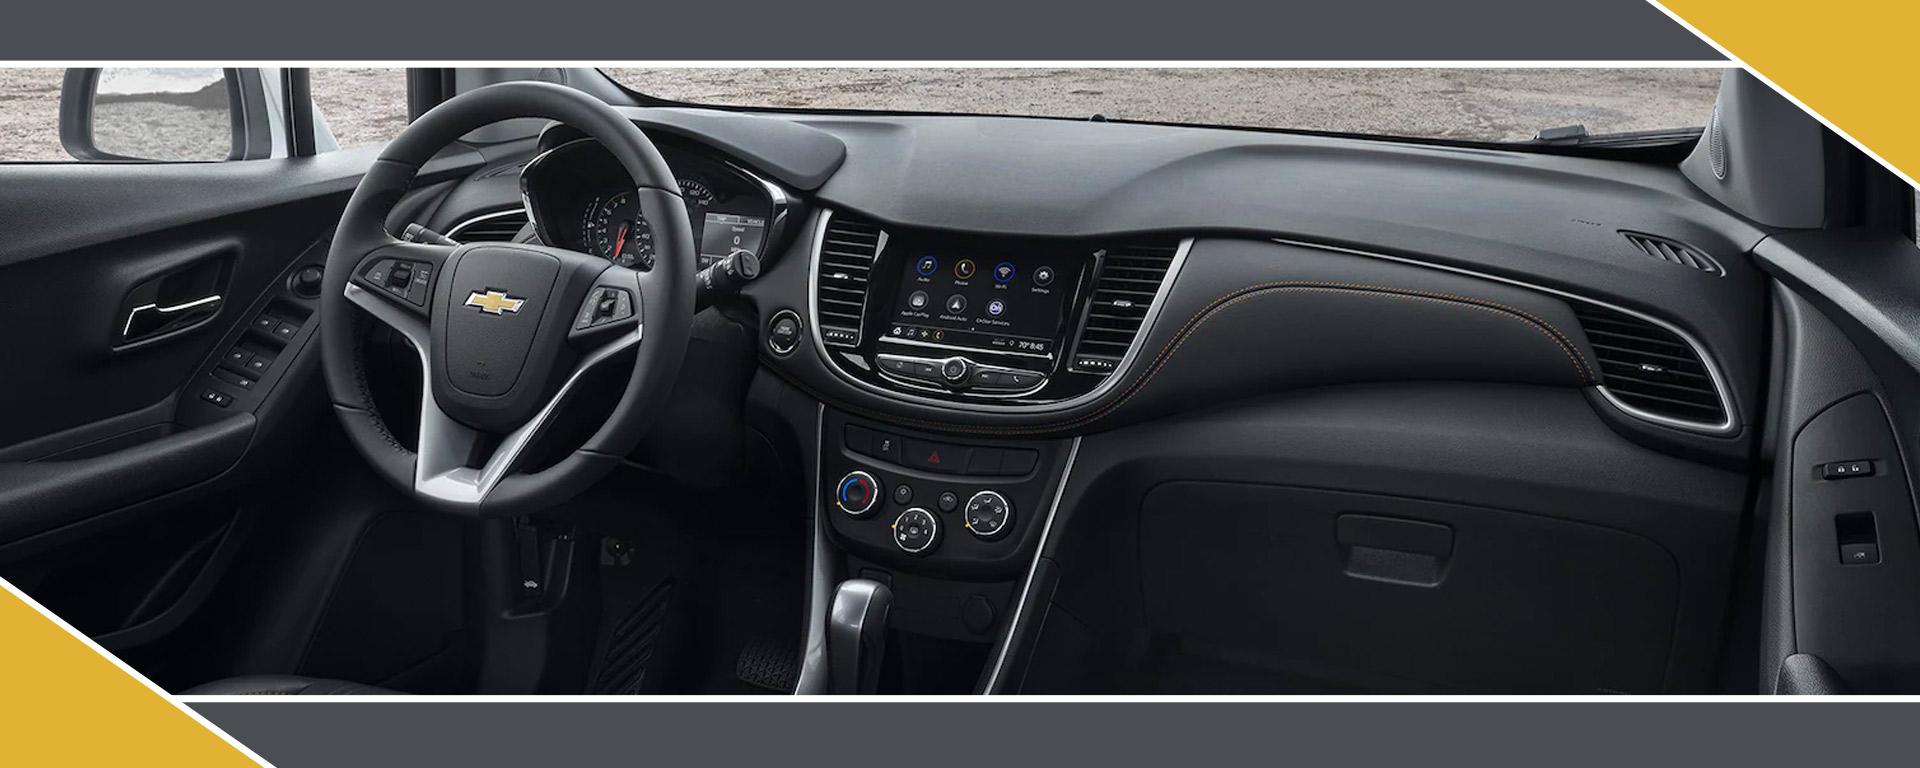 2021 Chevrolet Trax interior